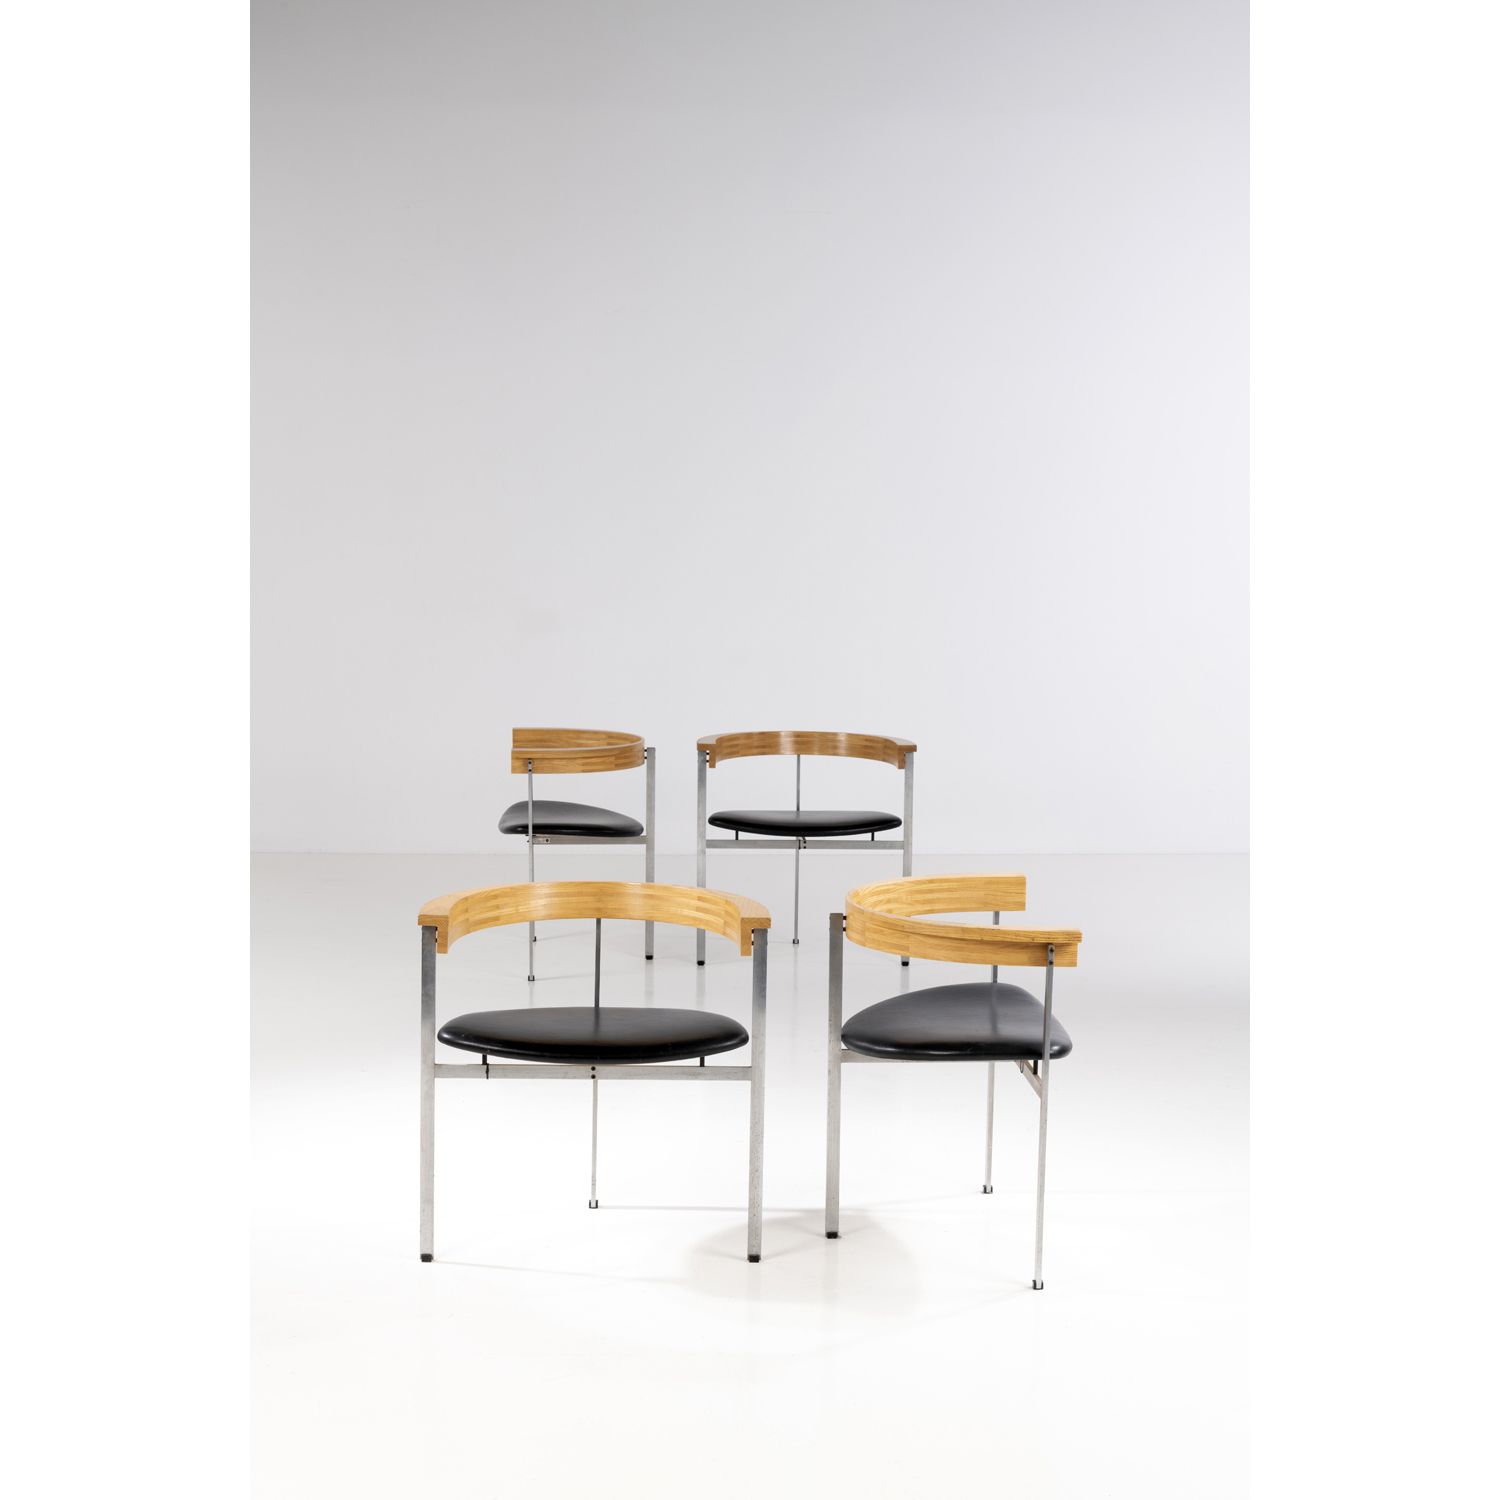 Null 普尔-克耶霍尔姆(1929-1980)

型号PK11

四张椅子的套间

皮质、白蜡和镀镍钢

科尔德-克里斯滕森版

设计于20世纪60年代

高&hellip;